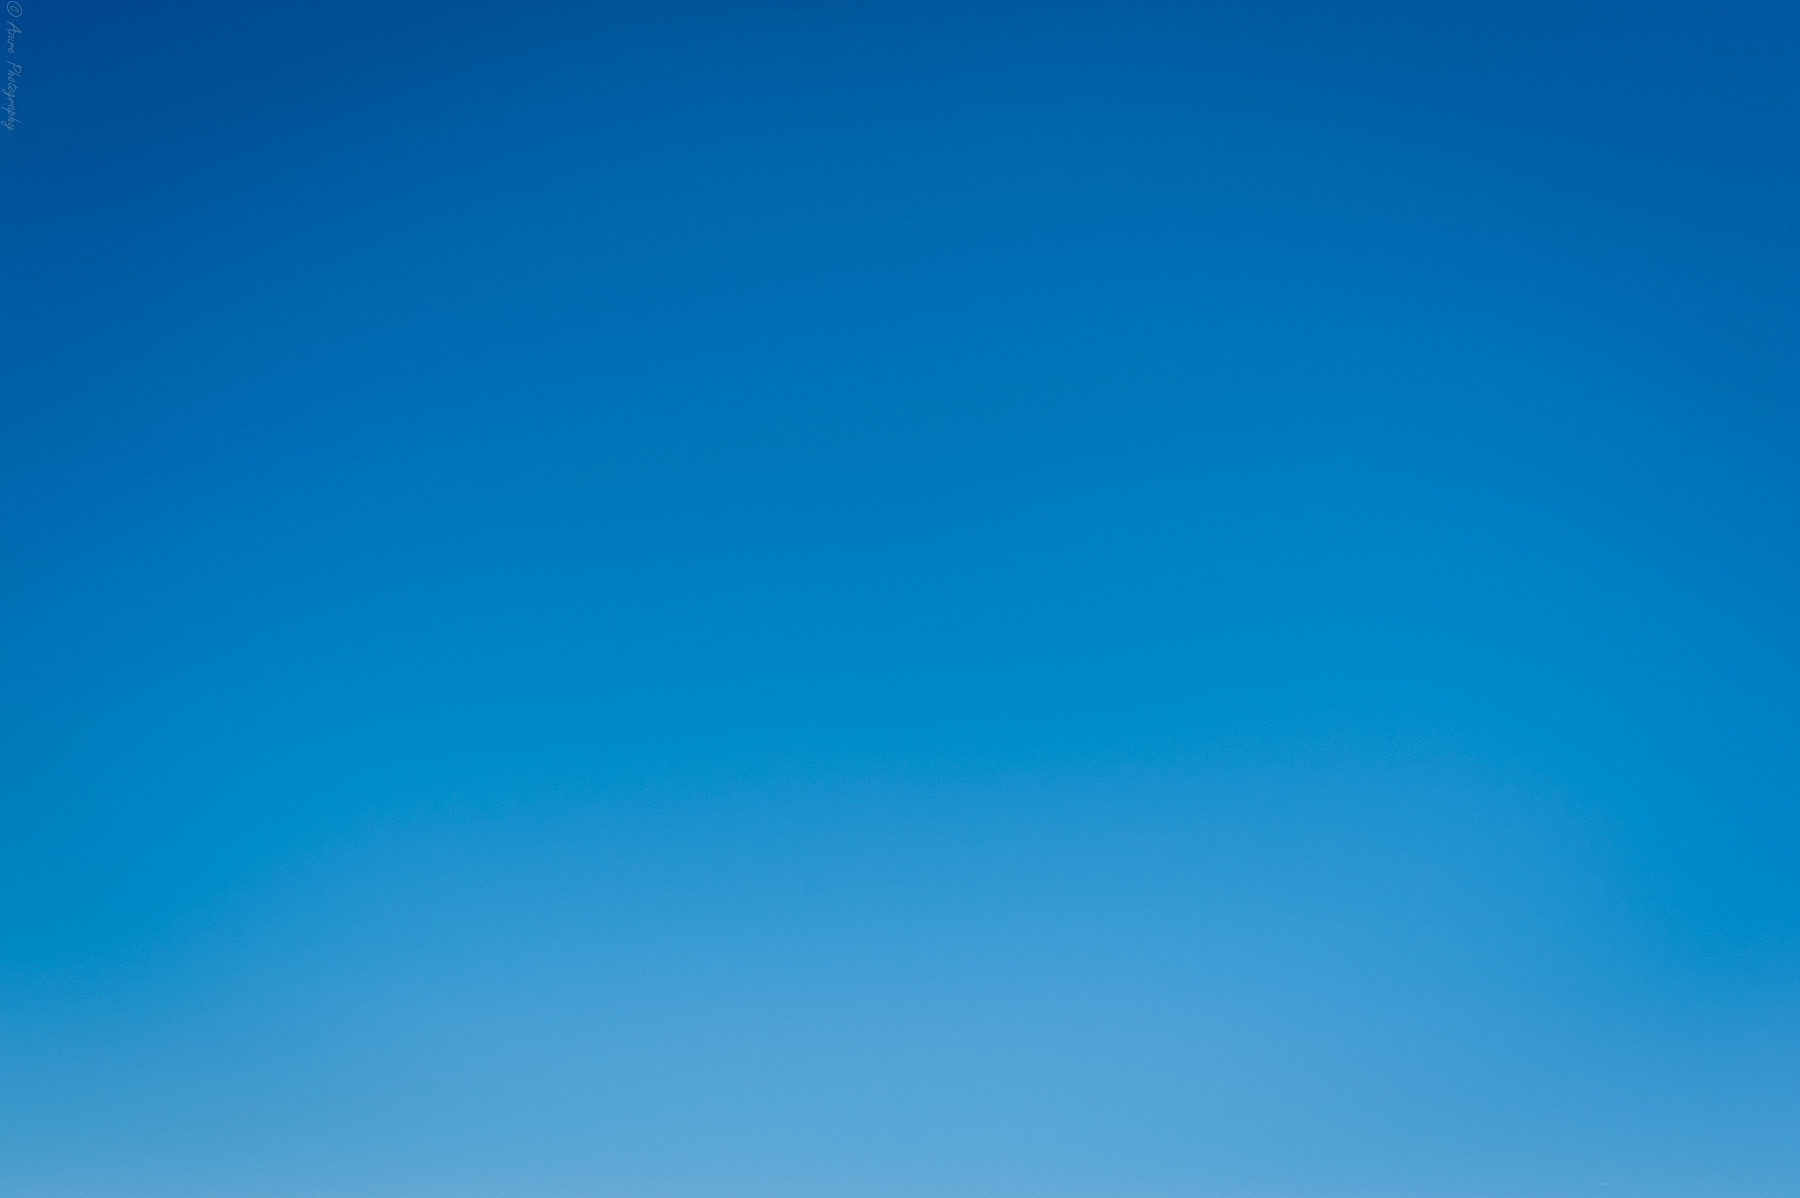 Clear Blue Sky by nescio17 on DeviantArt